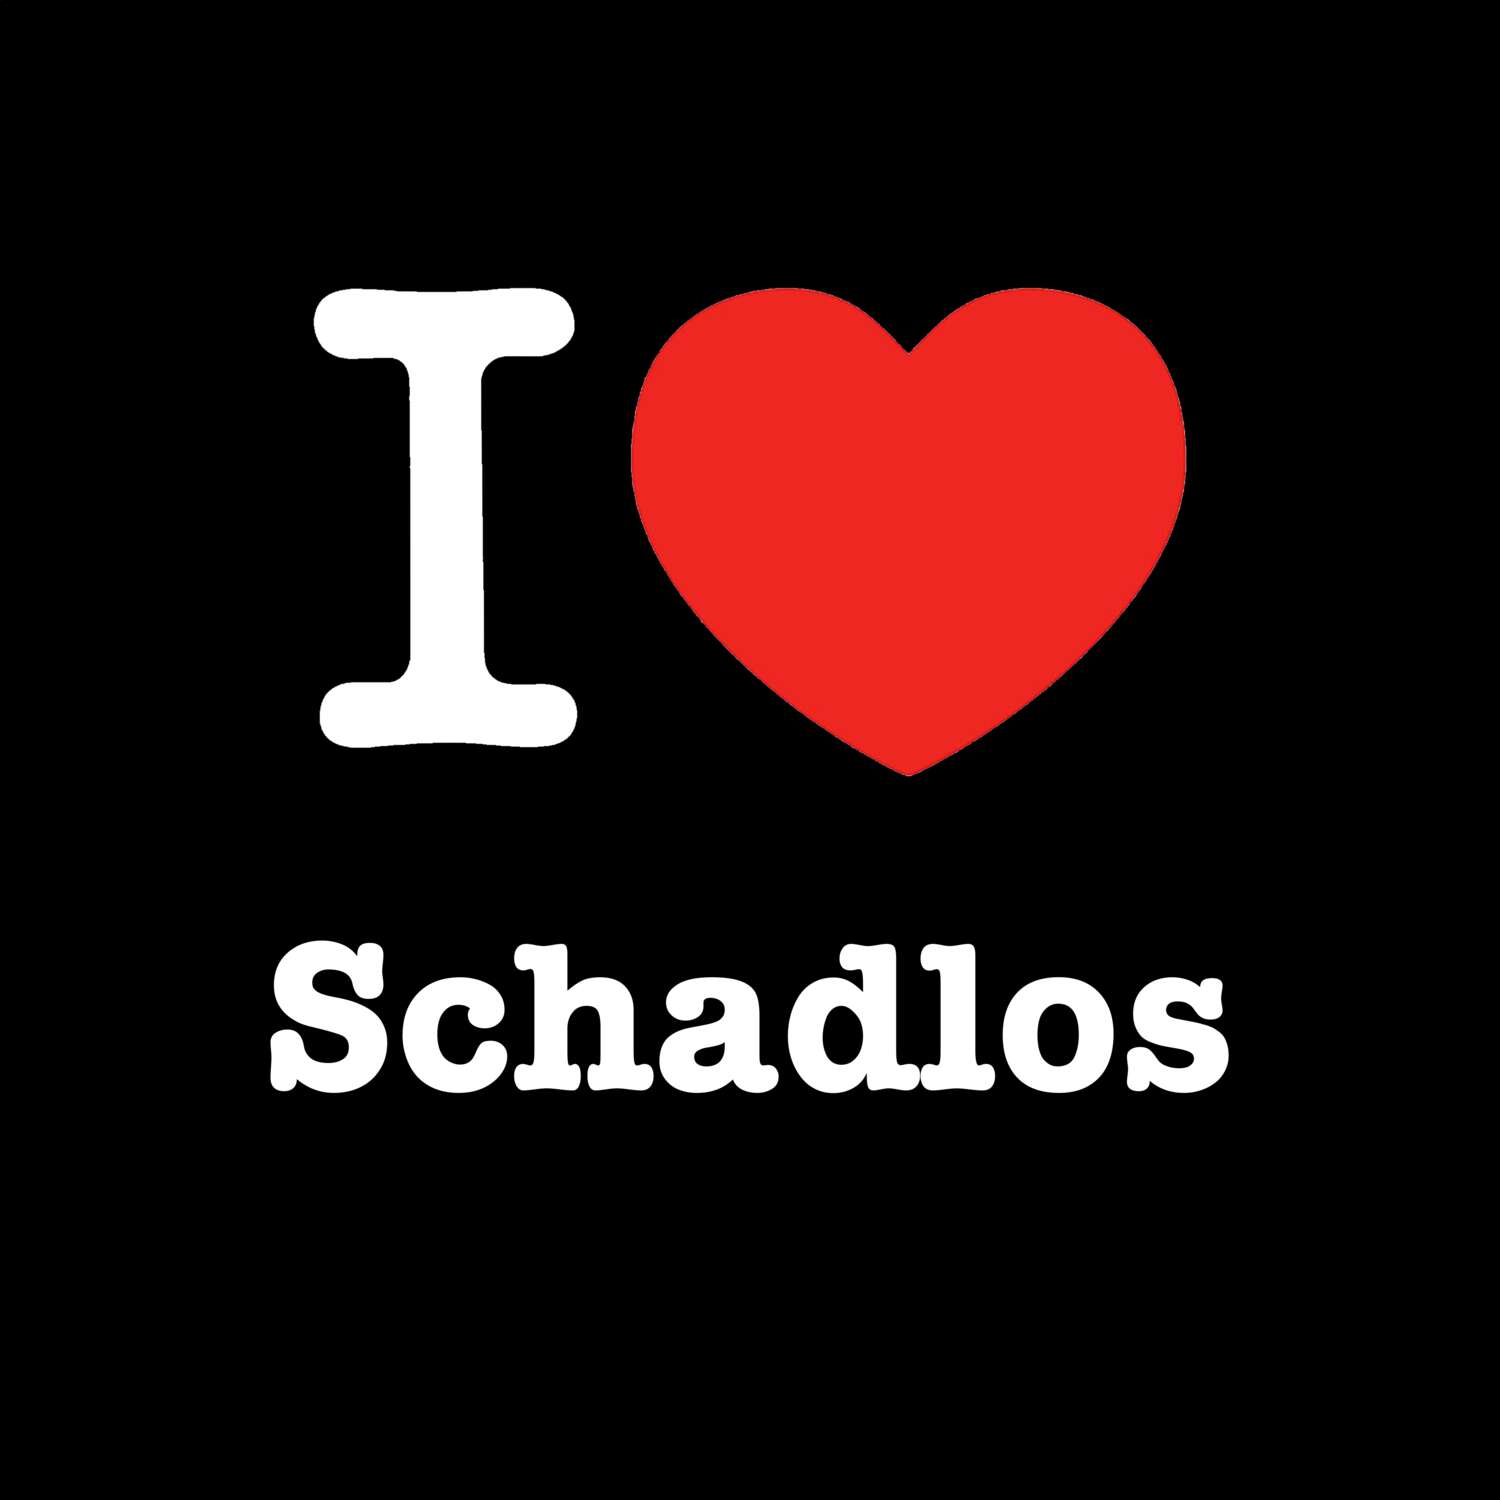 Schadlos T-Shirt »I love«